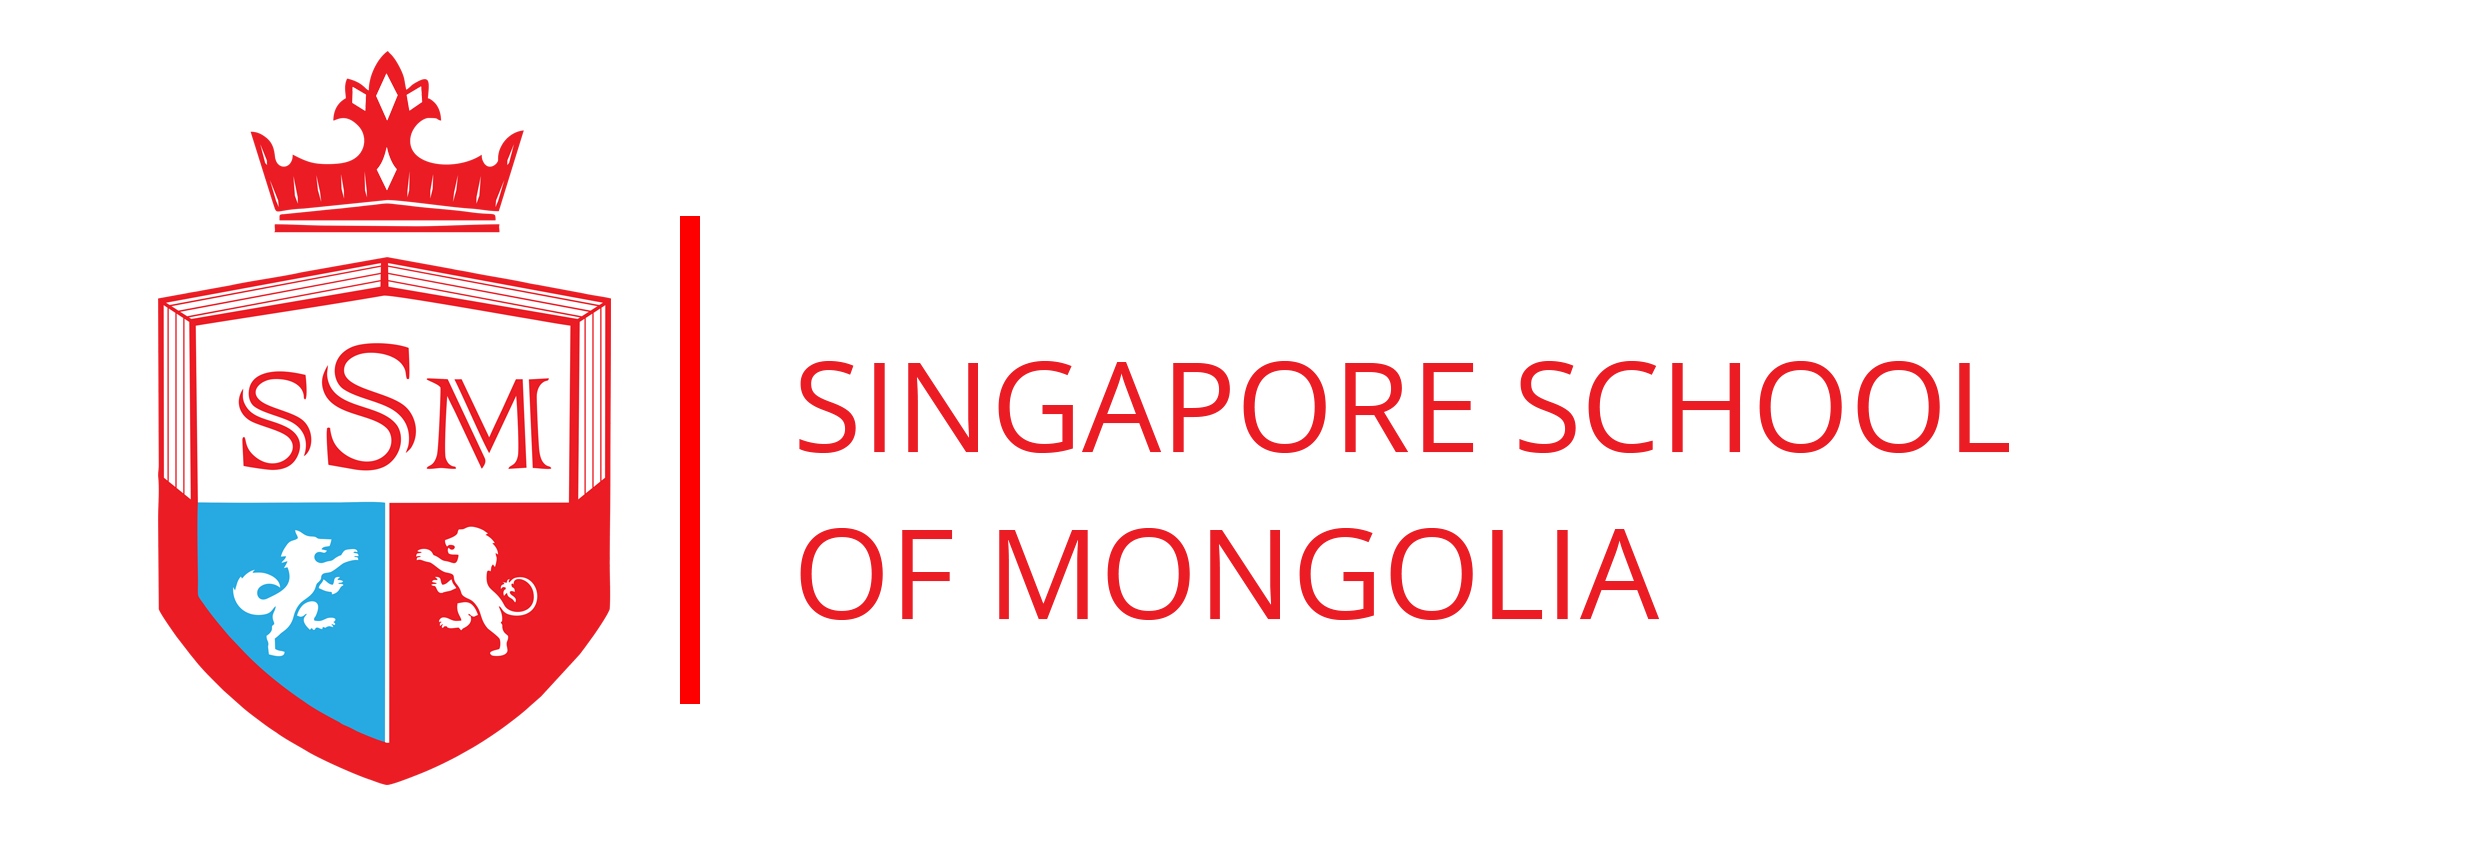 Singapore school of Mongolia